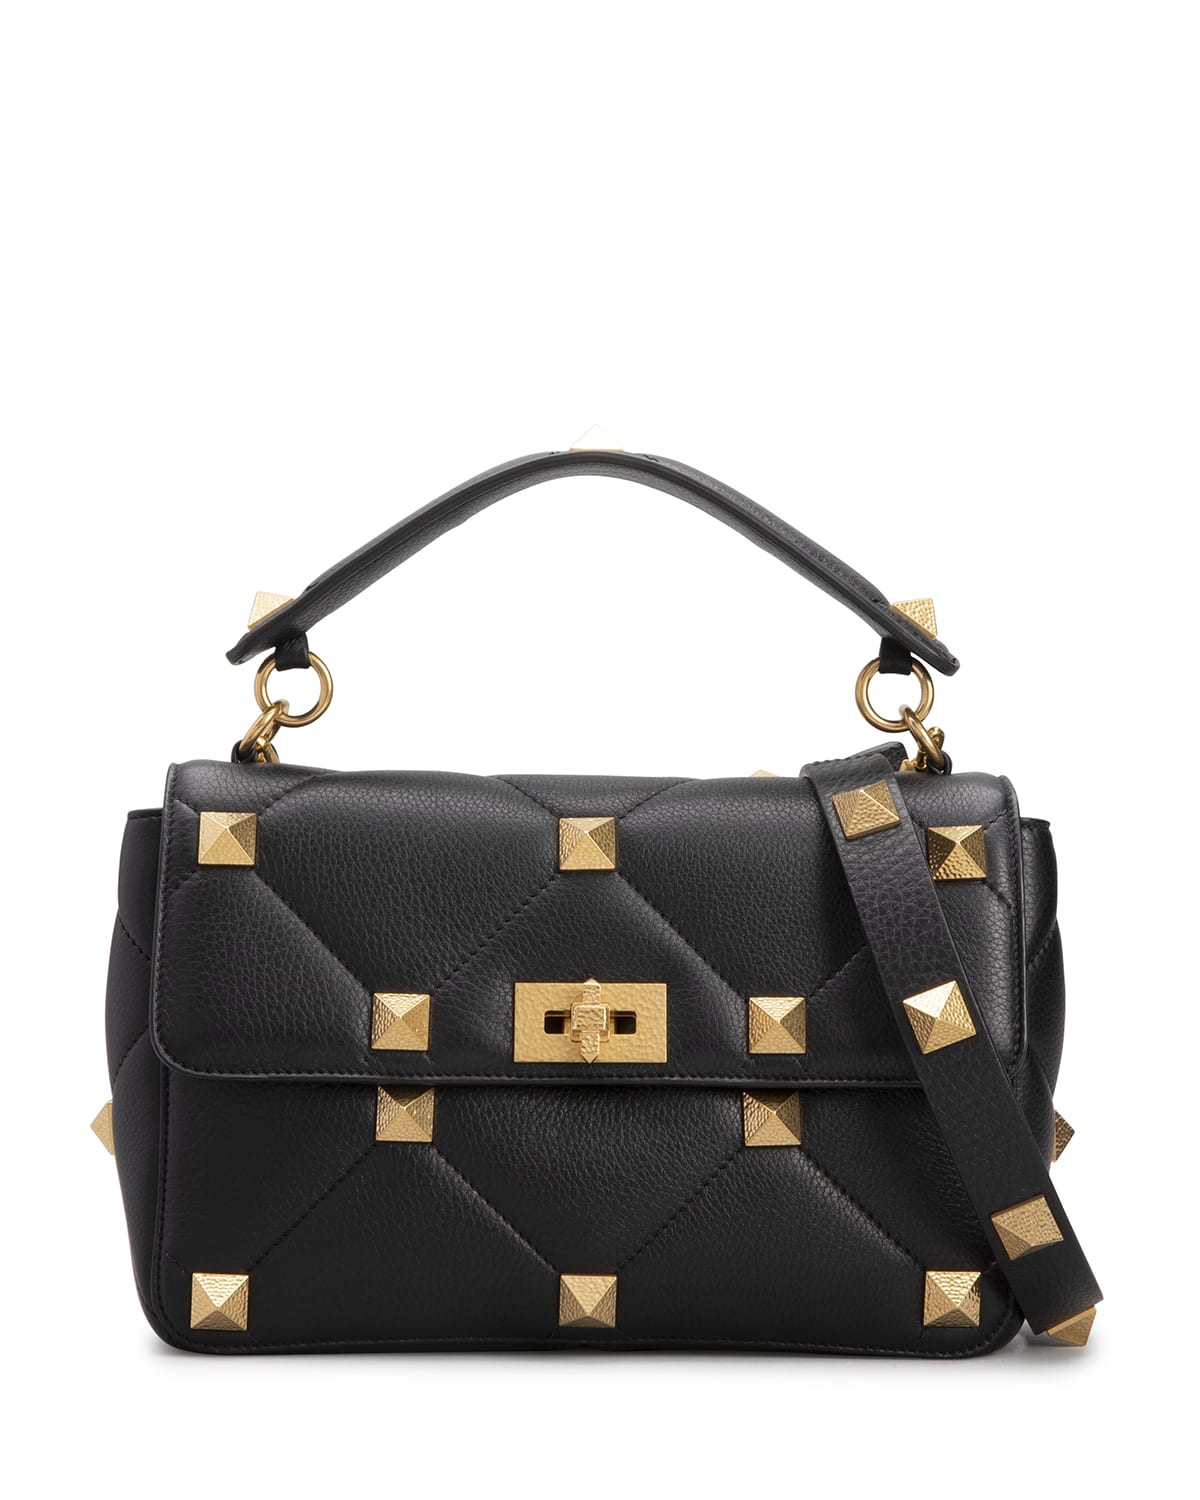 Black Quilted Leather Handbag | Neiman Marcus